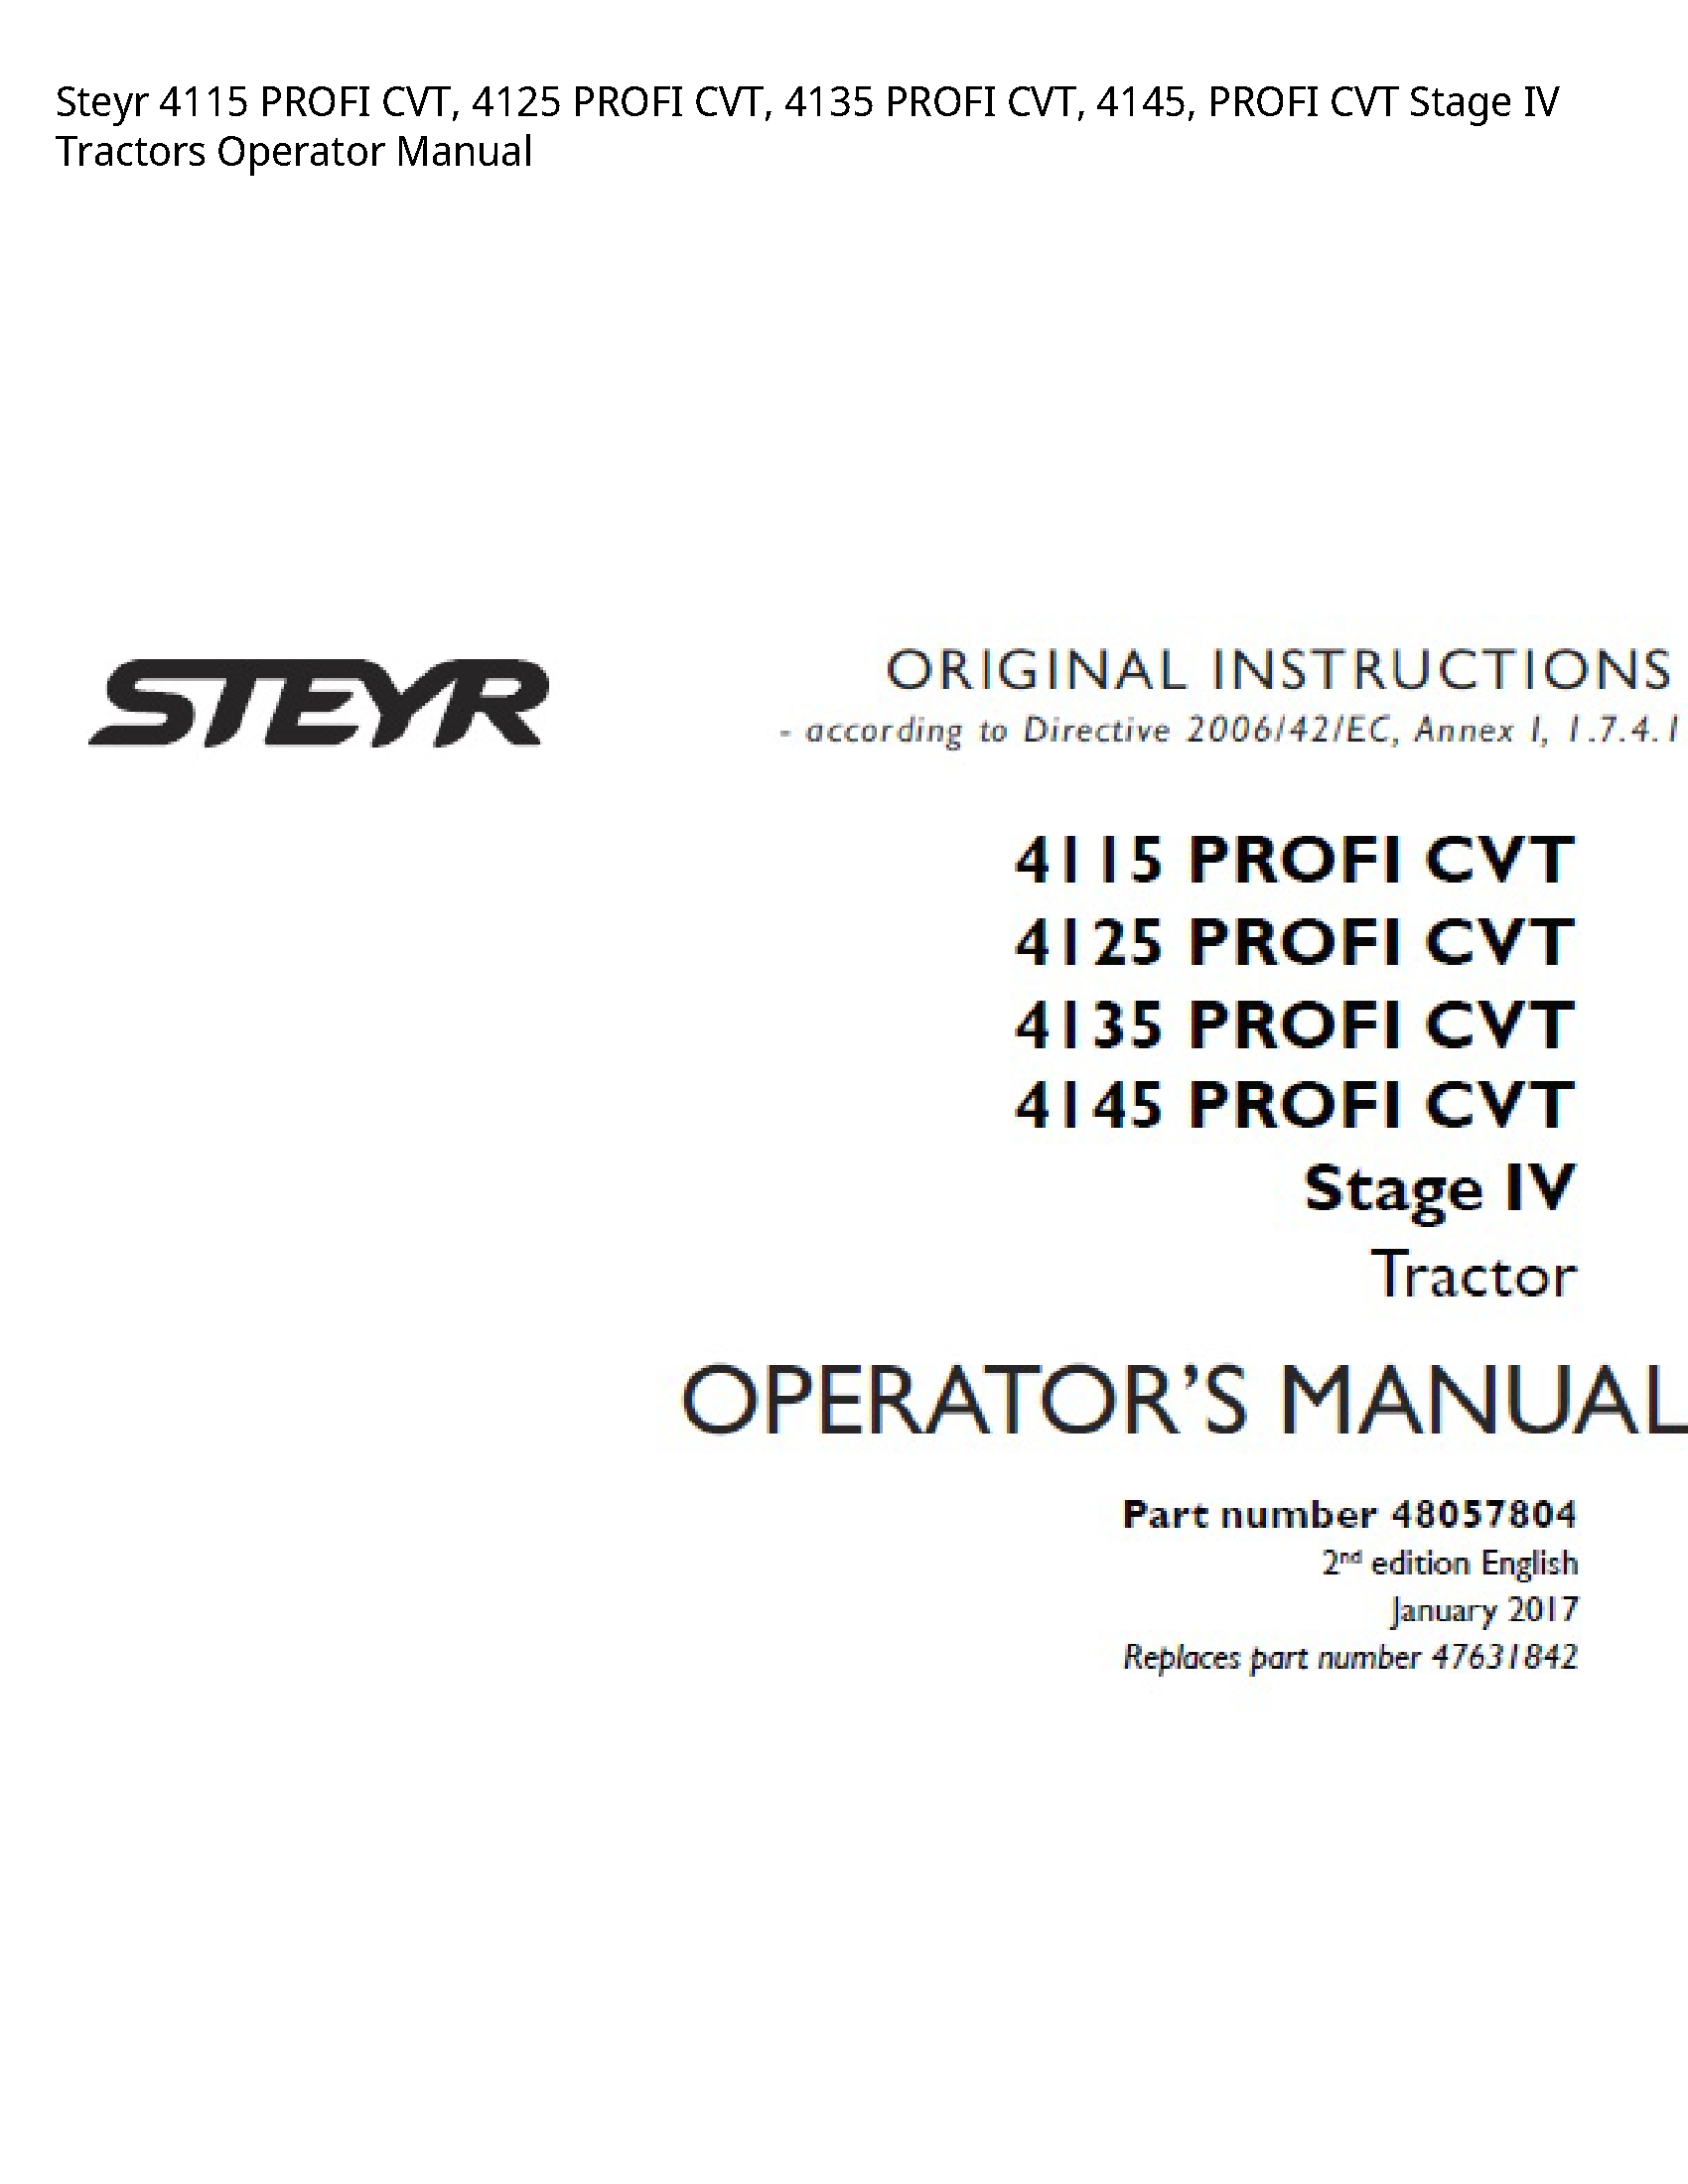 Steyr 4115 PROFI CVT manual